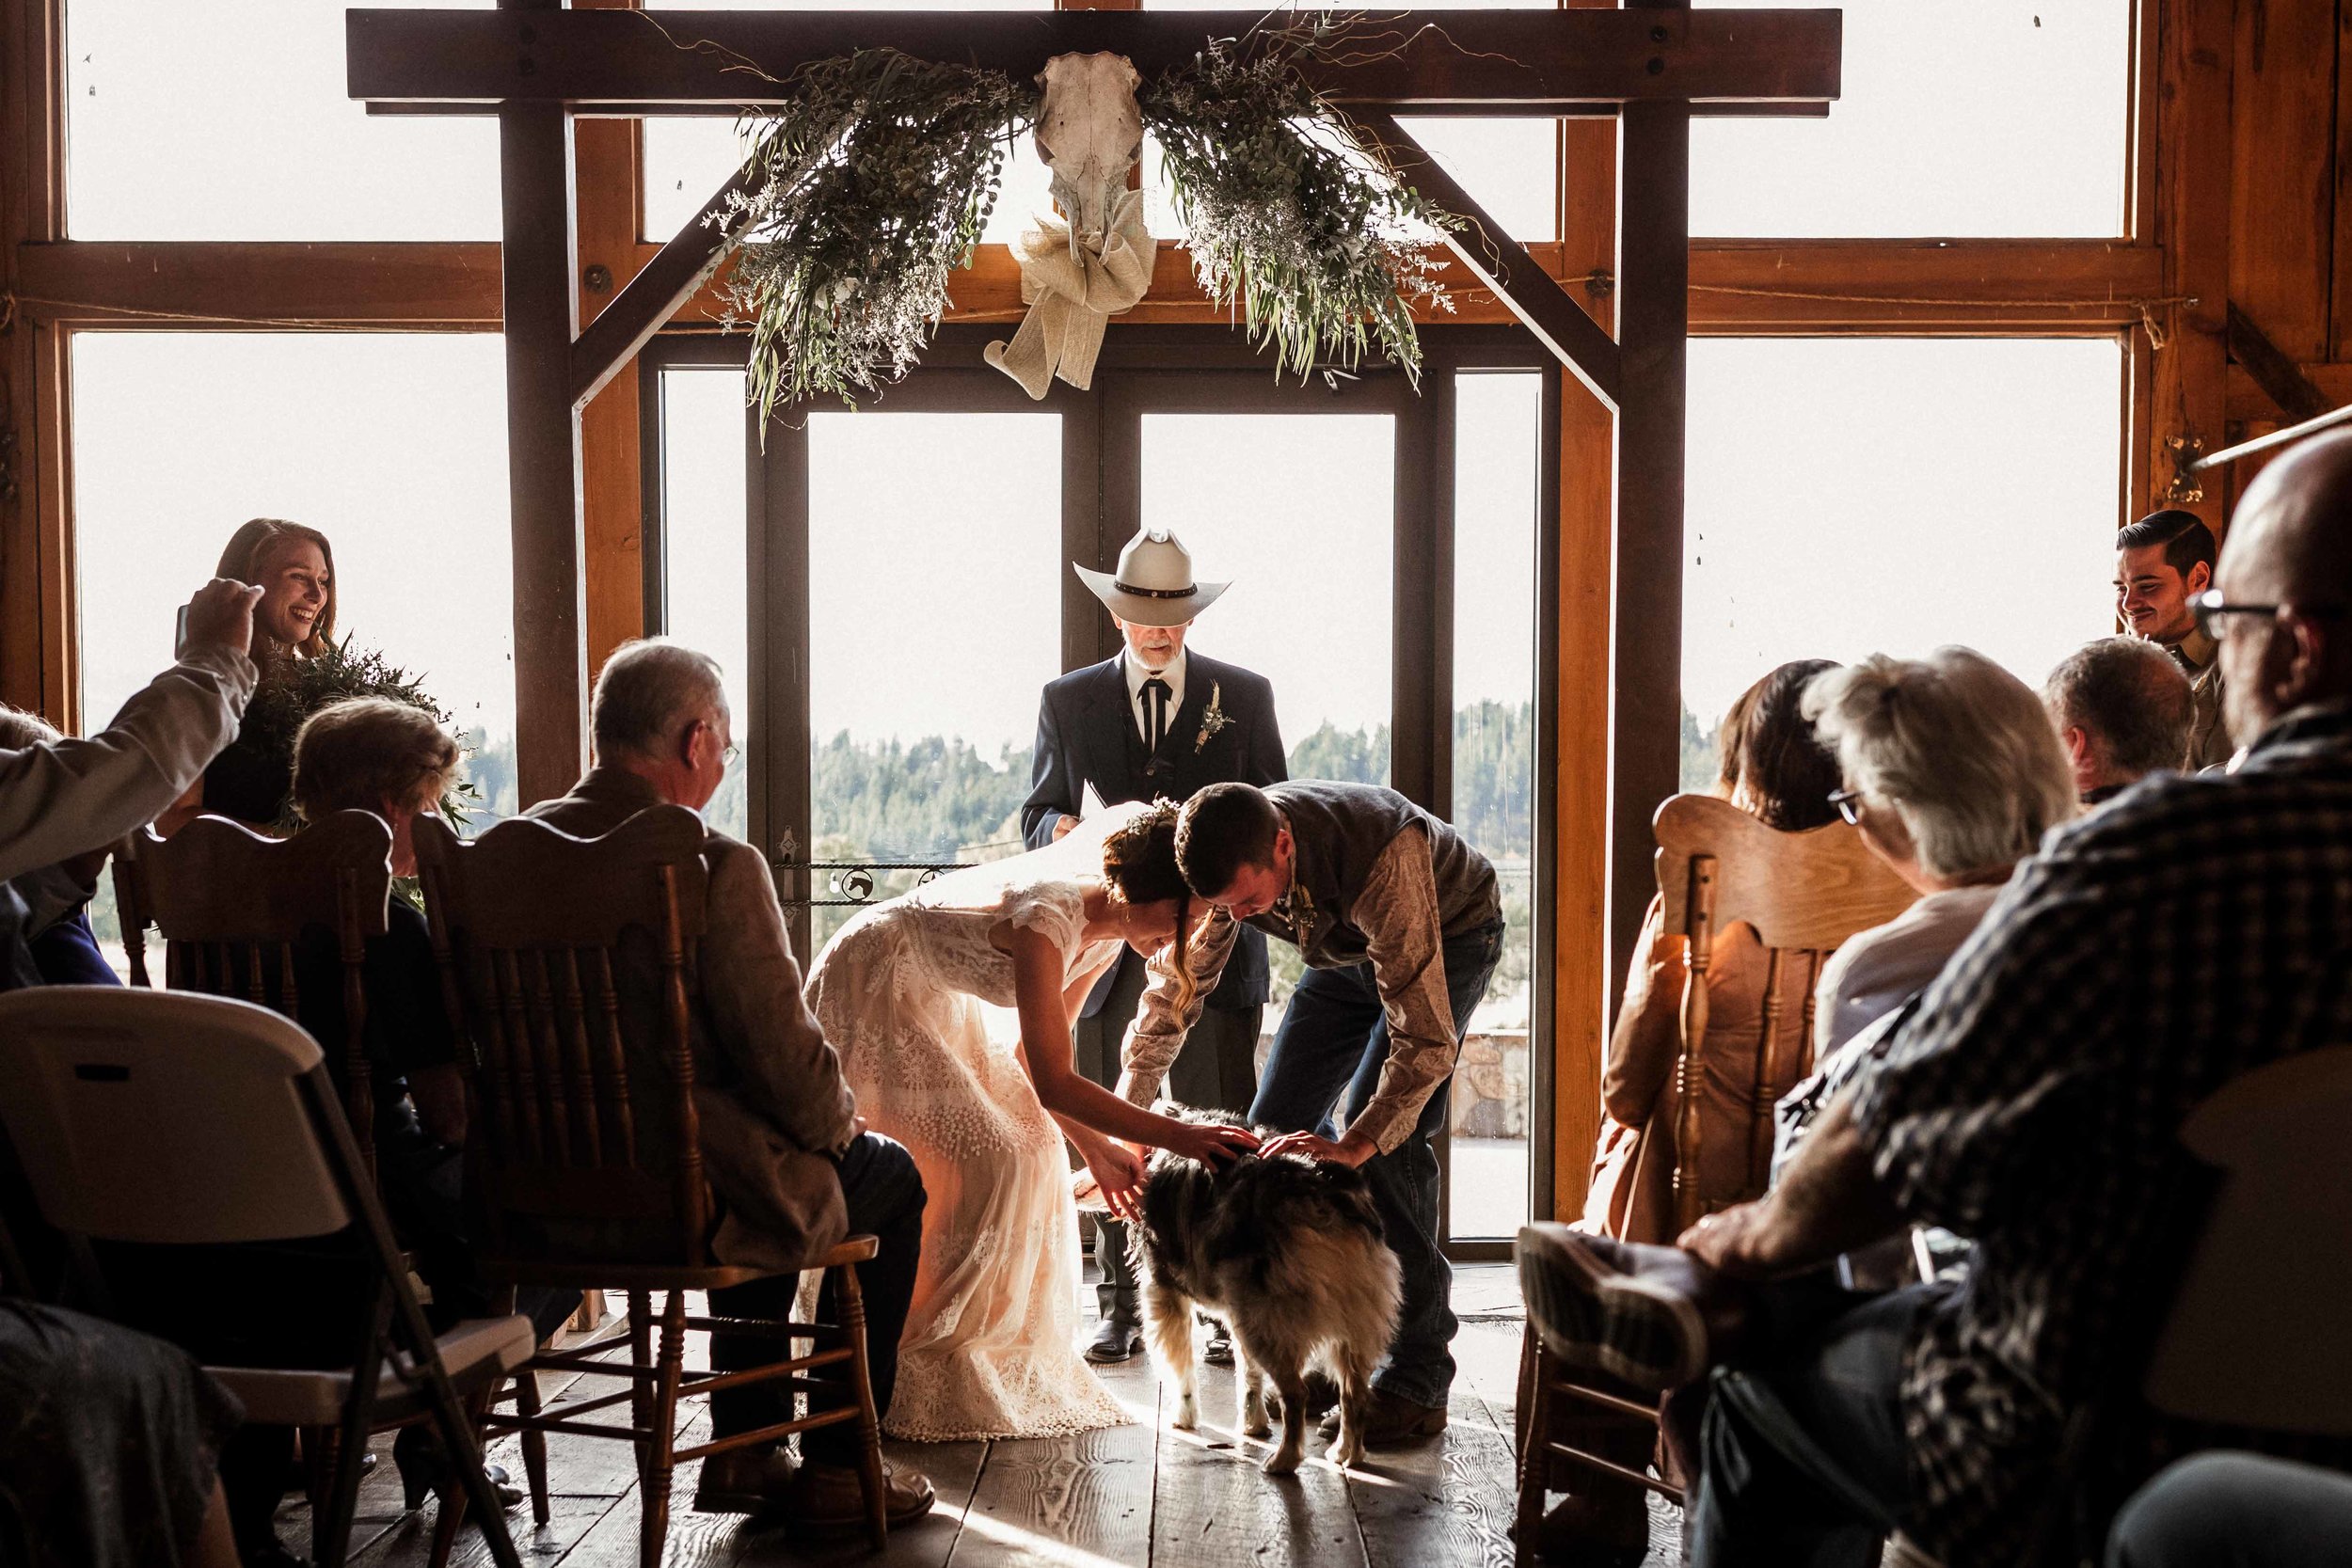 The Cattle Barn Fall Wedding